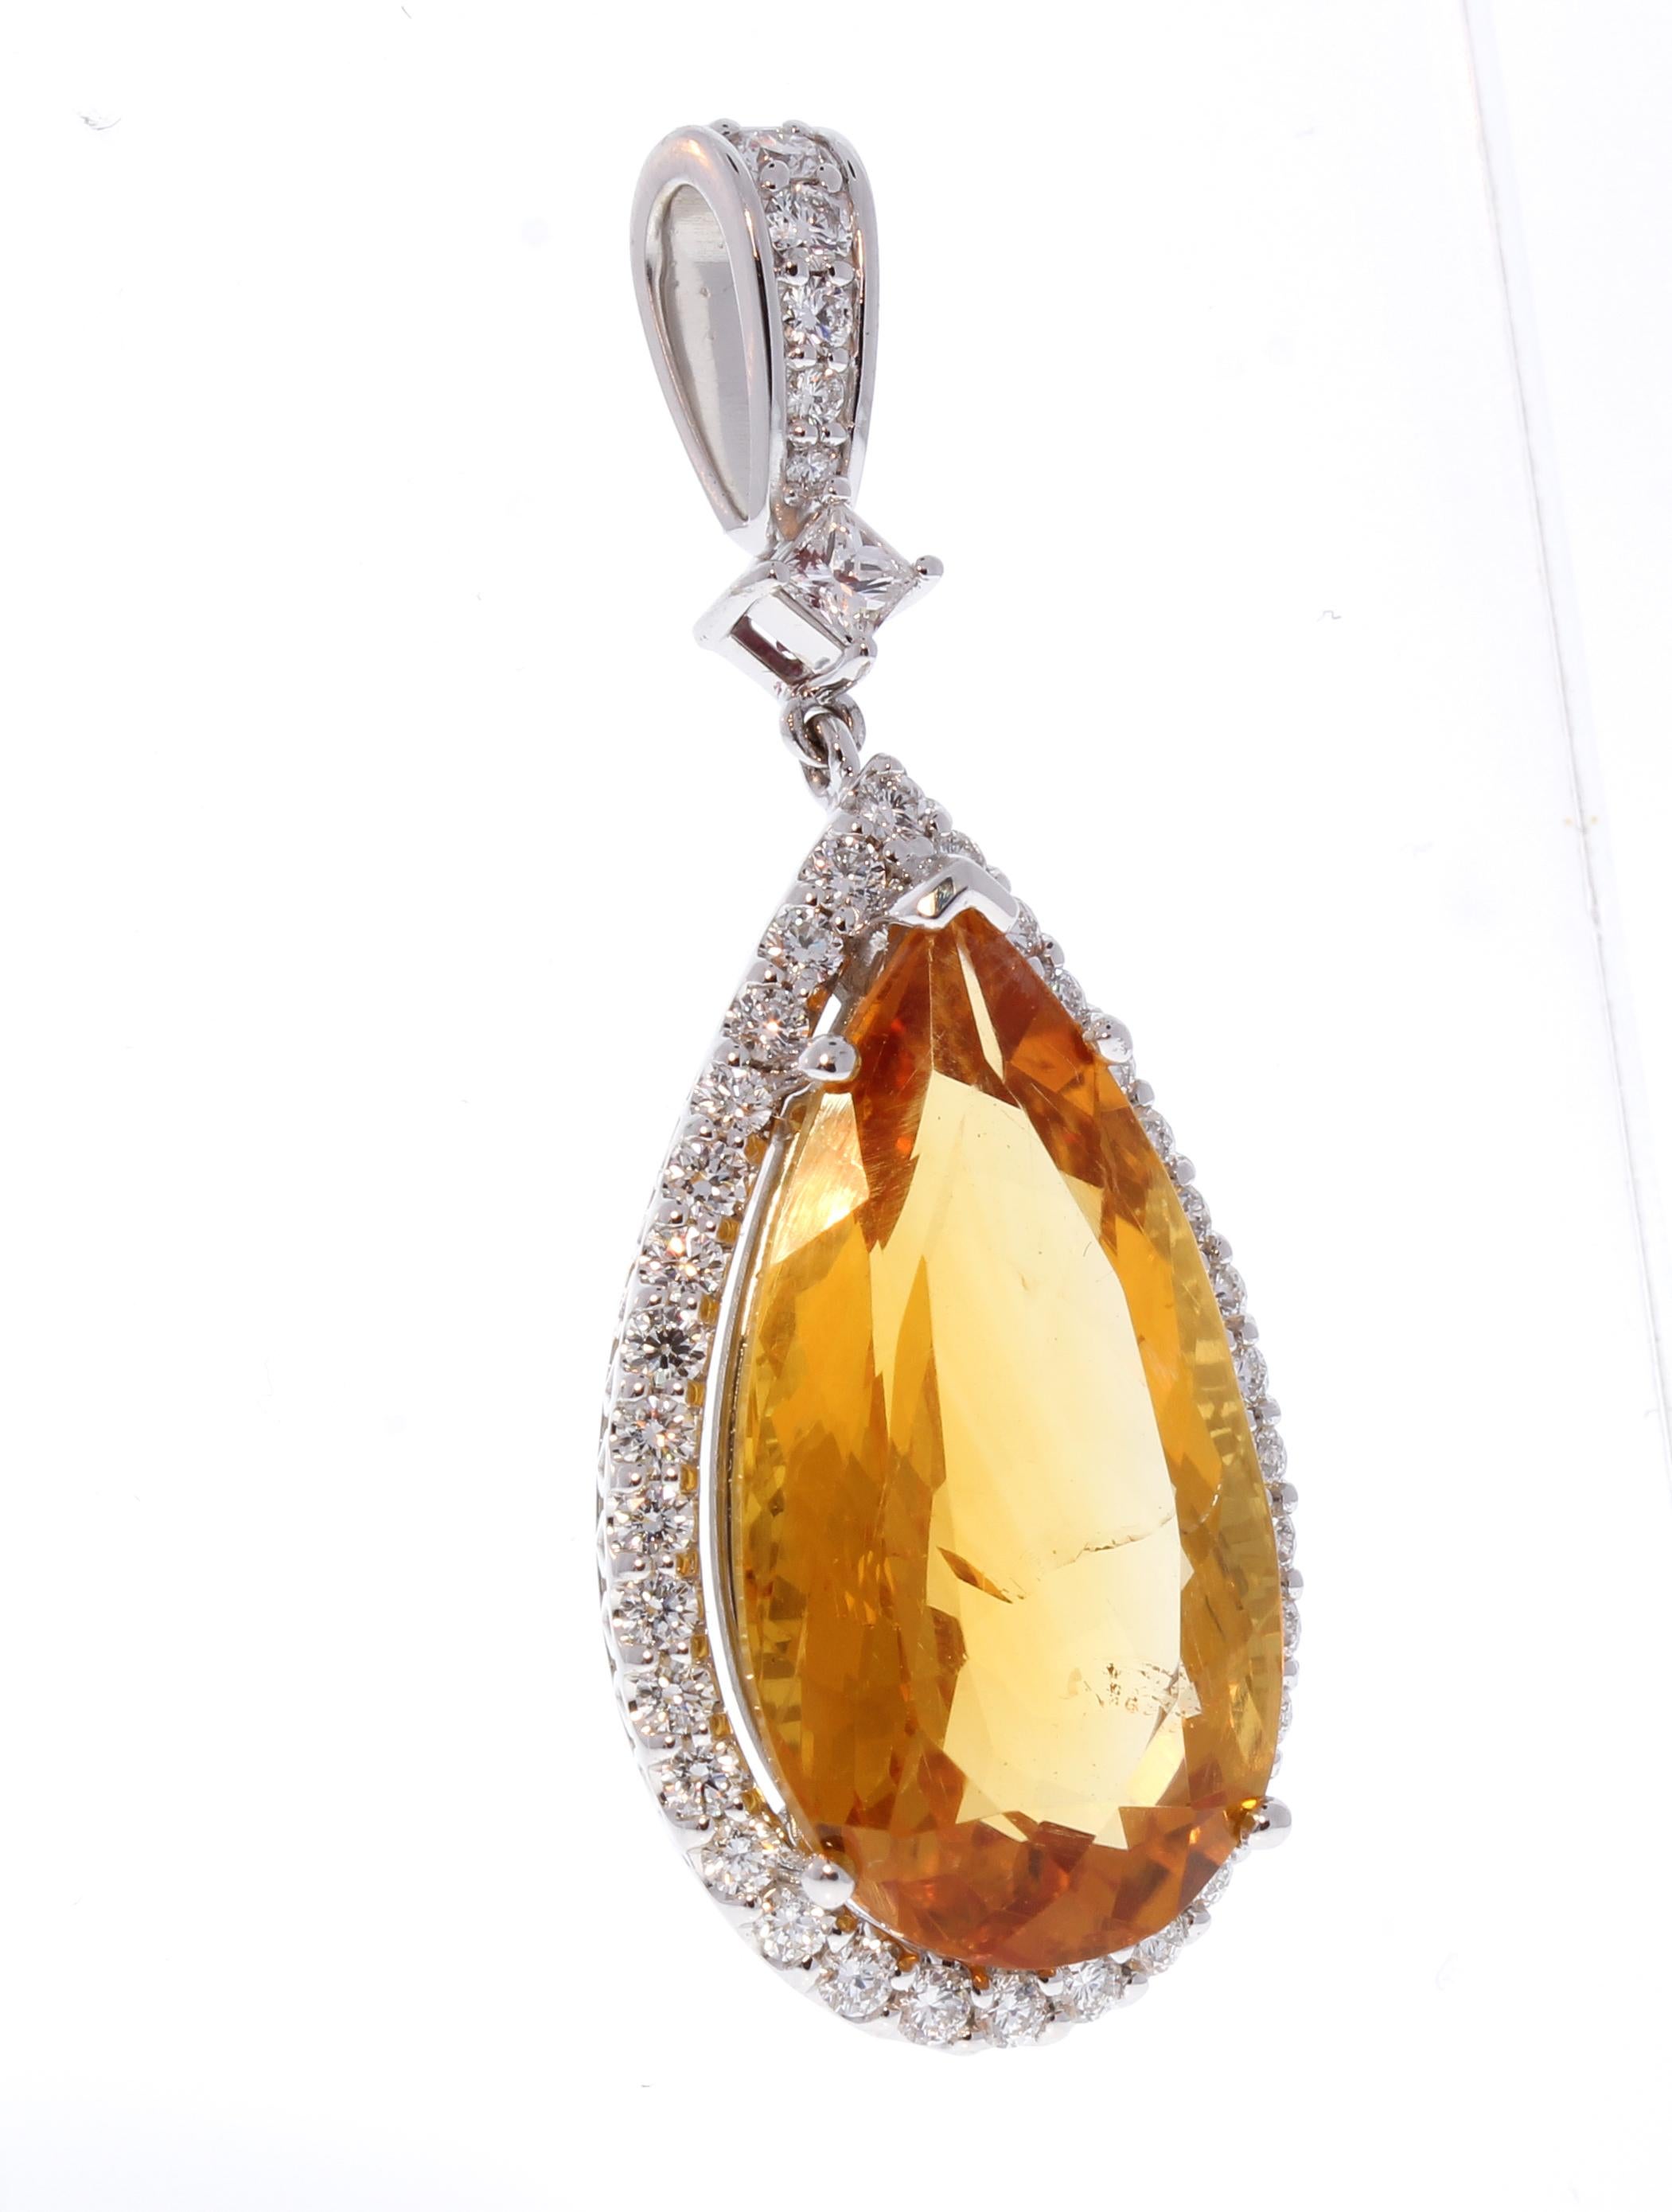 Contemporary 13.62 Carat Pear Shape Citrine and Diamond Pendant in 18 Karat White Gold